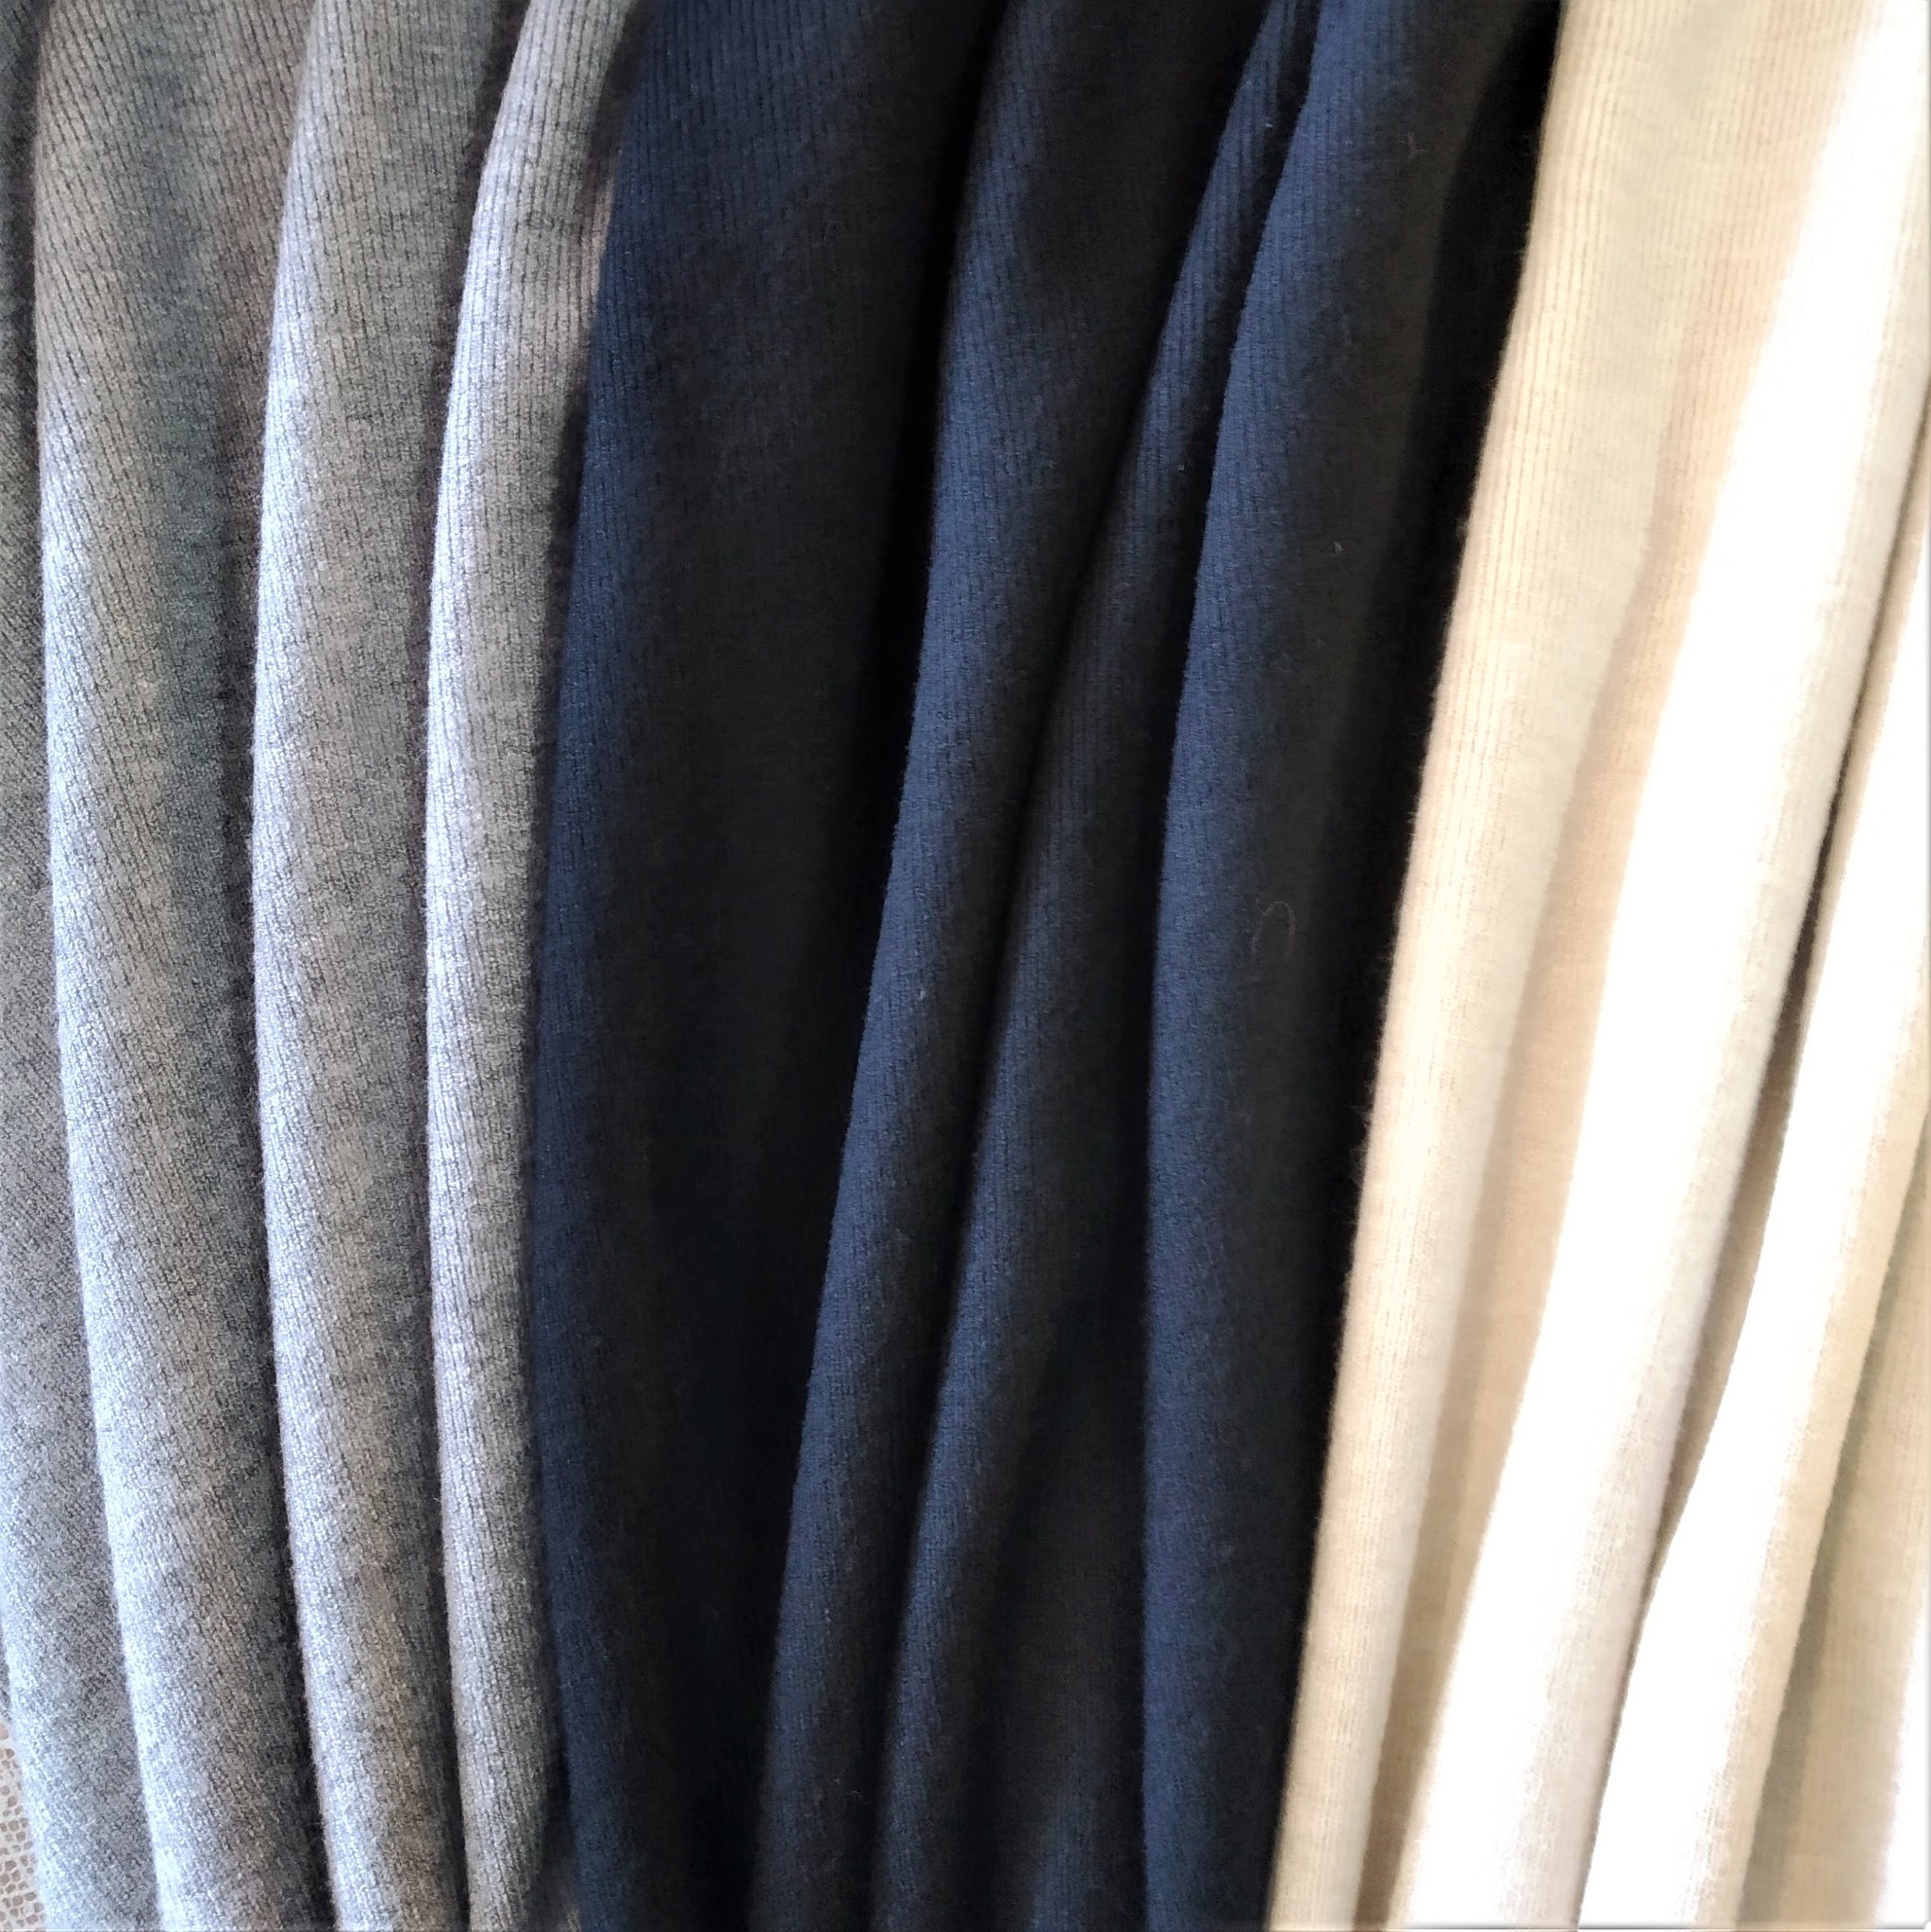 women plus size long sleeves fine knit cotton winter tunic, túnica de manga larga Top de punto de invierno de algodón fino para mujer, bikinn.com